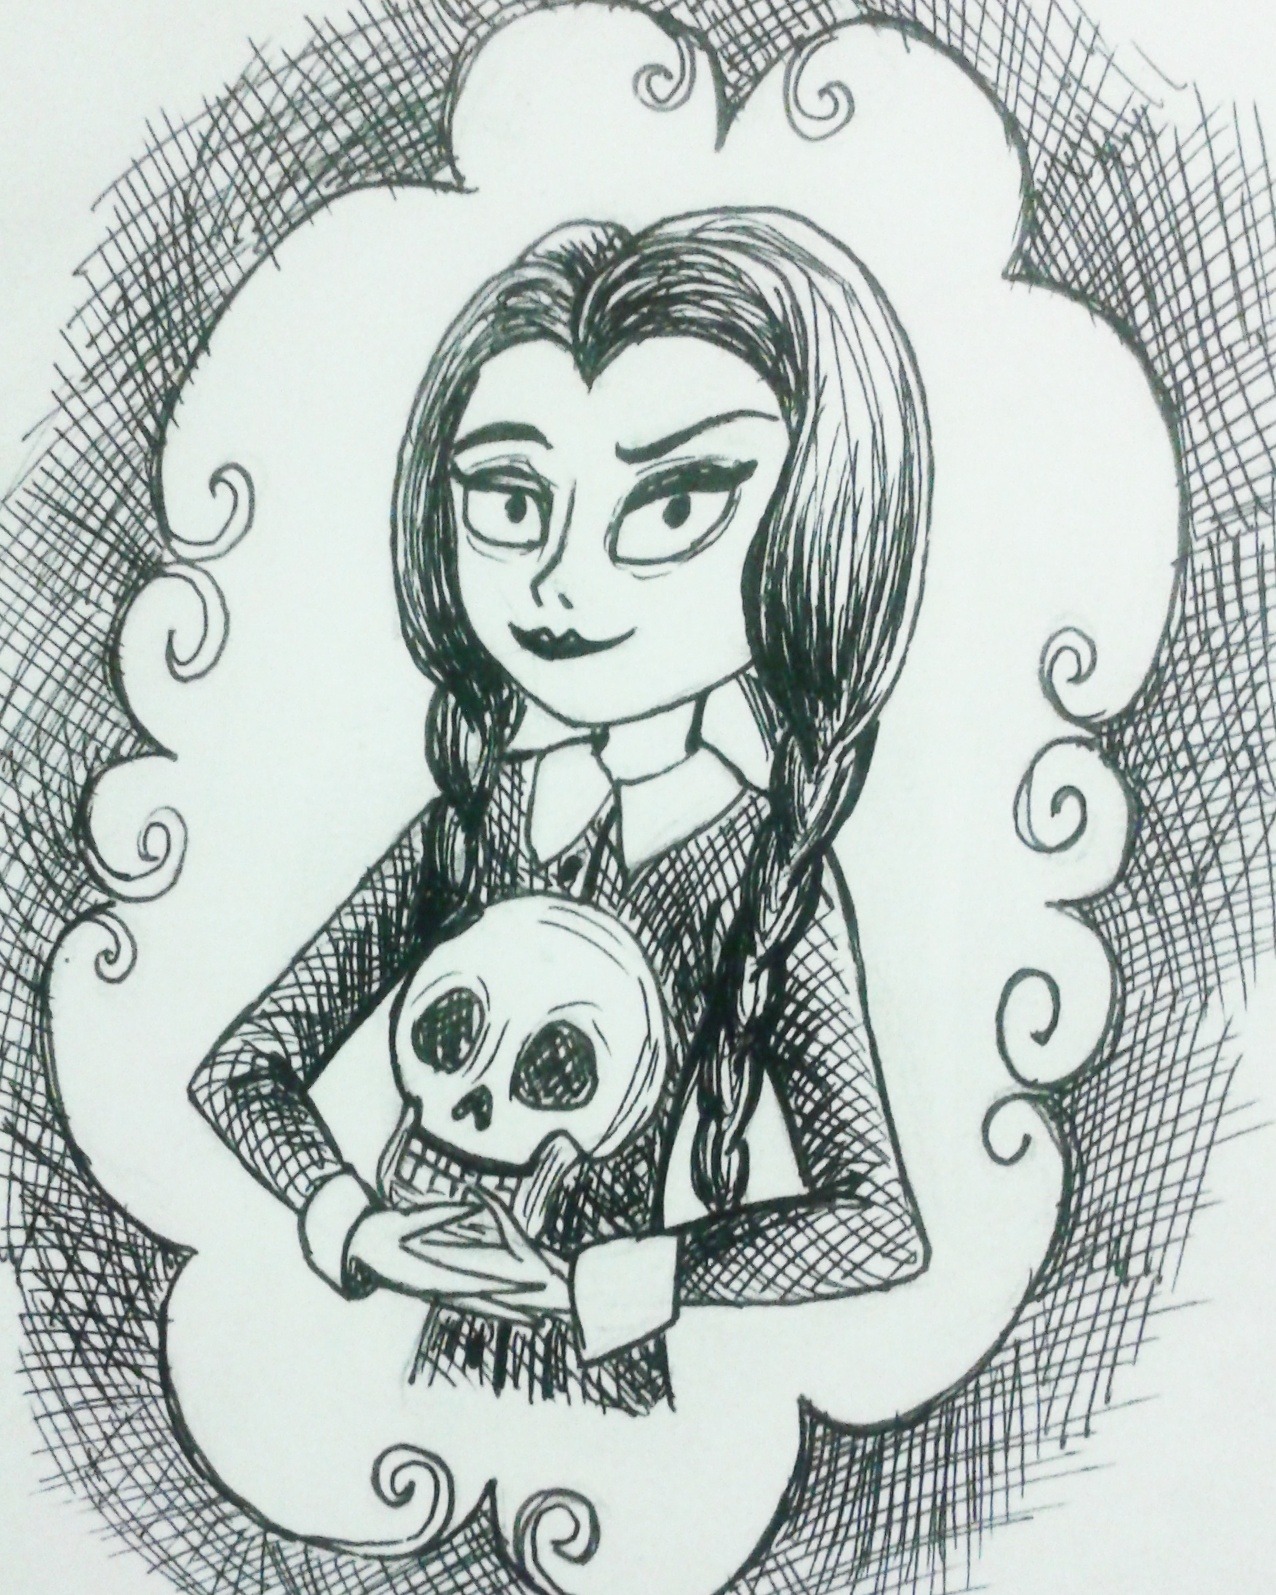 Wednesday Addams Pencil Sketch